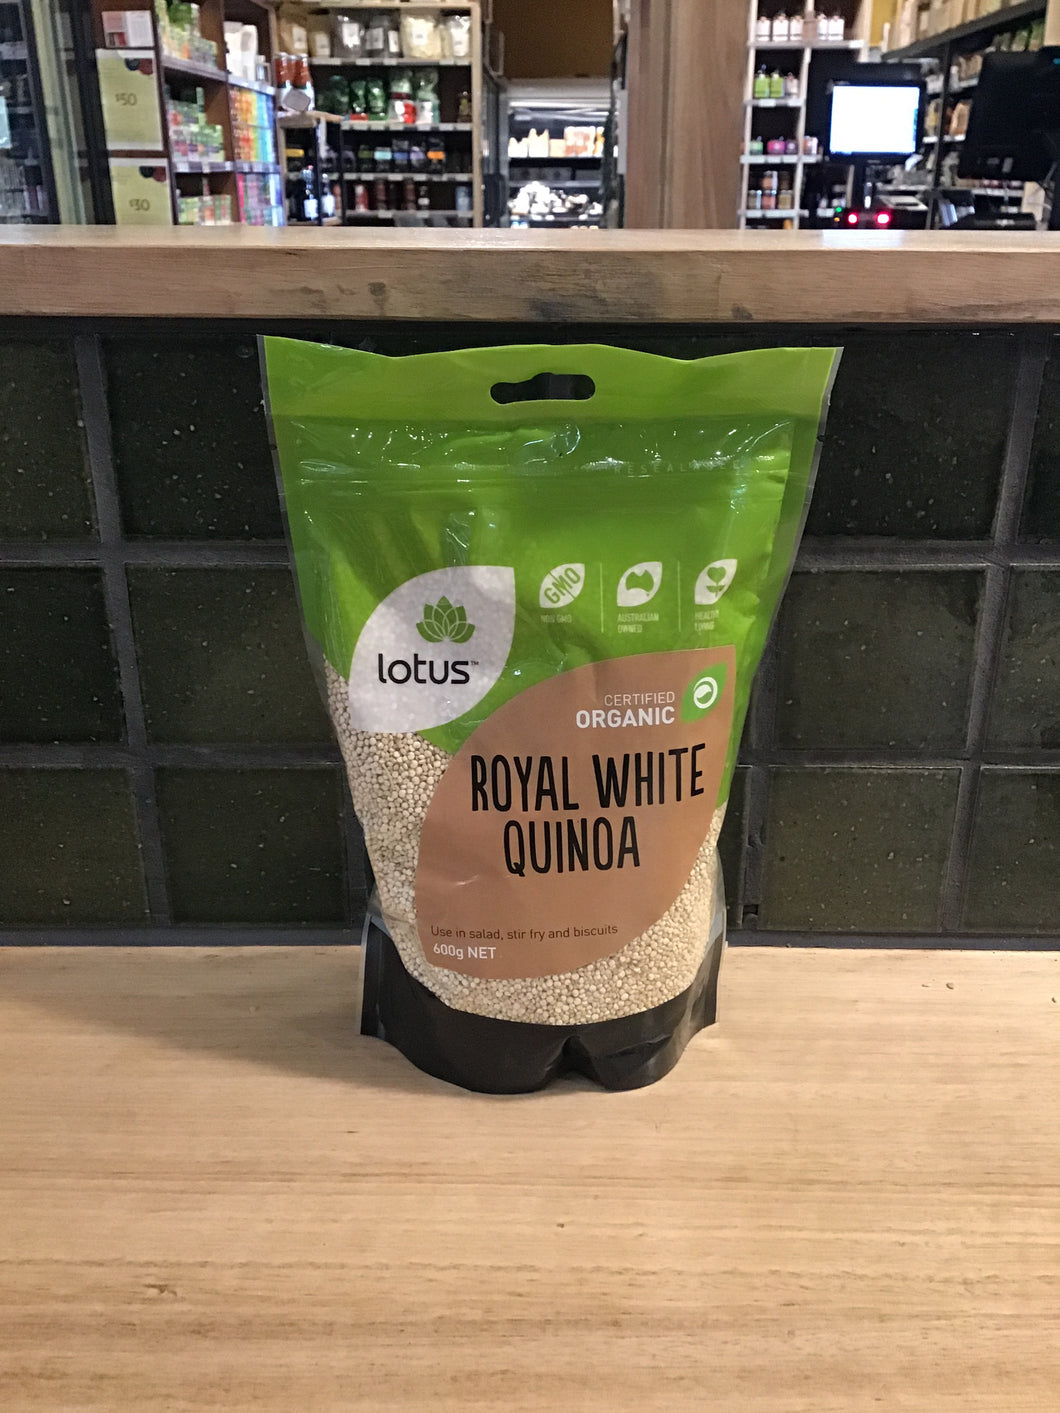 Lotus Quinoa Royal White Organic 600g